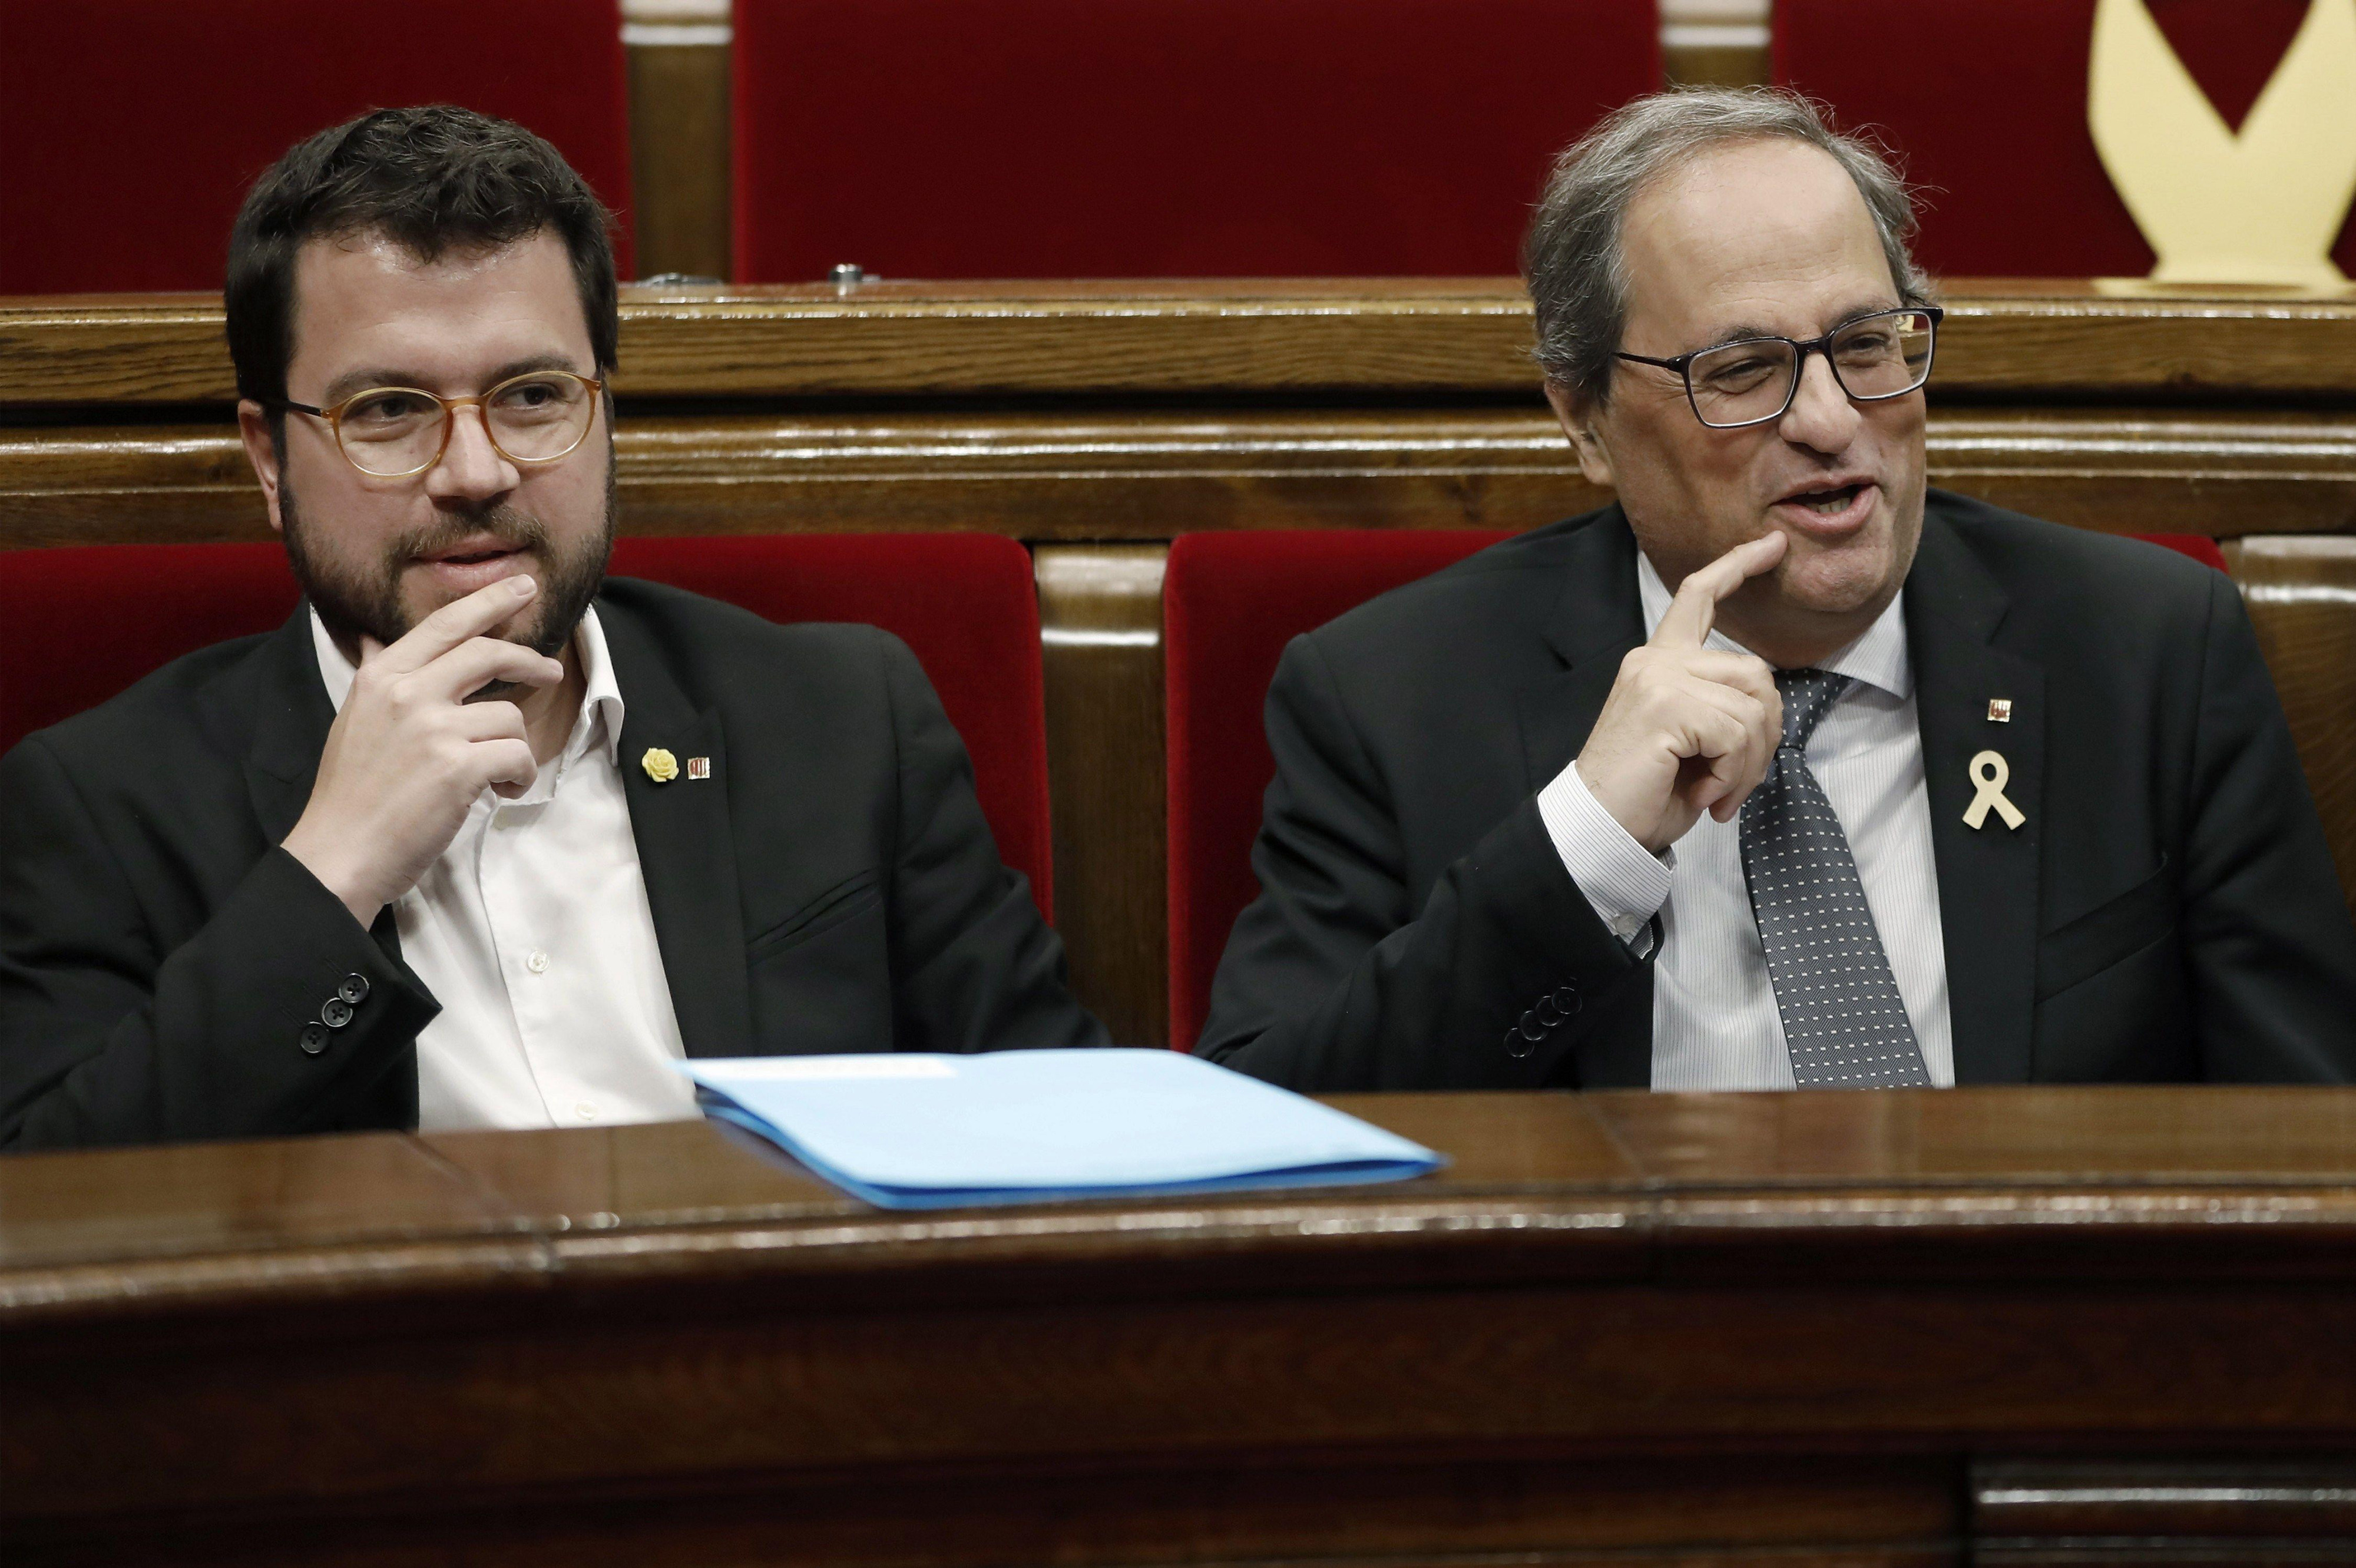 El vicepresidente de la Generalitat, Pere Aragonès, junto al expresidente Quim Torra en el Parlament en una imagen de archivo / EFE